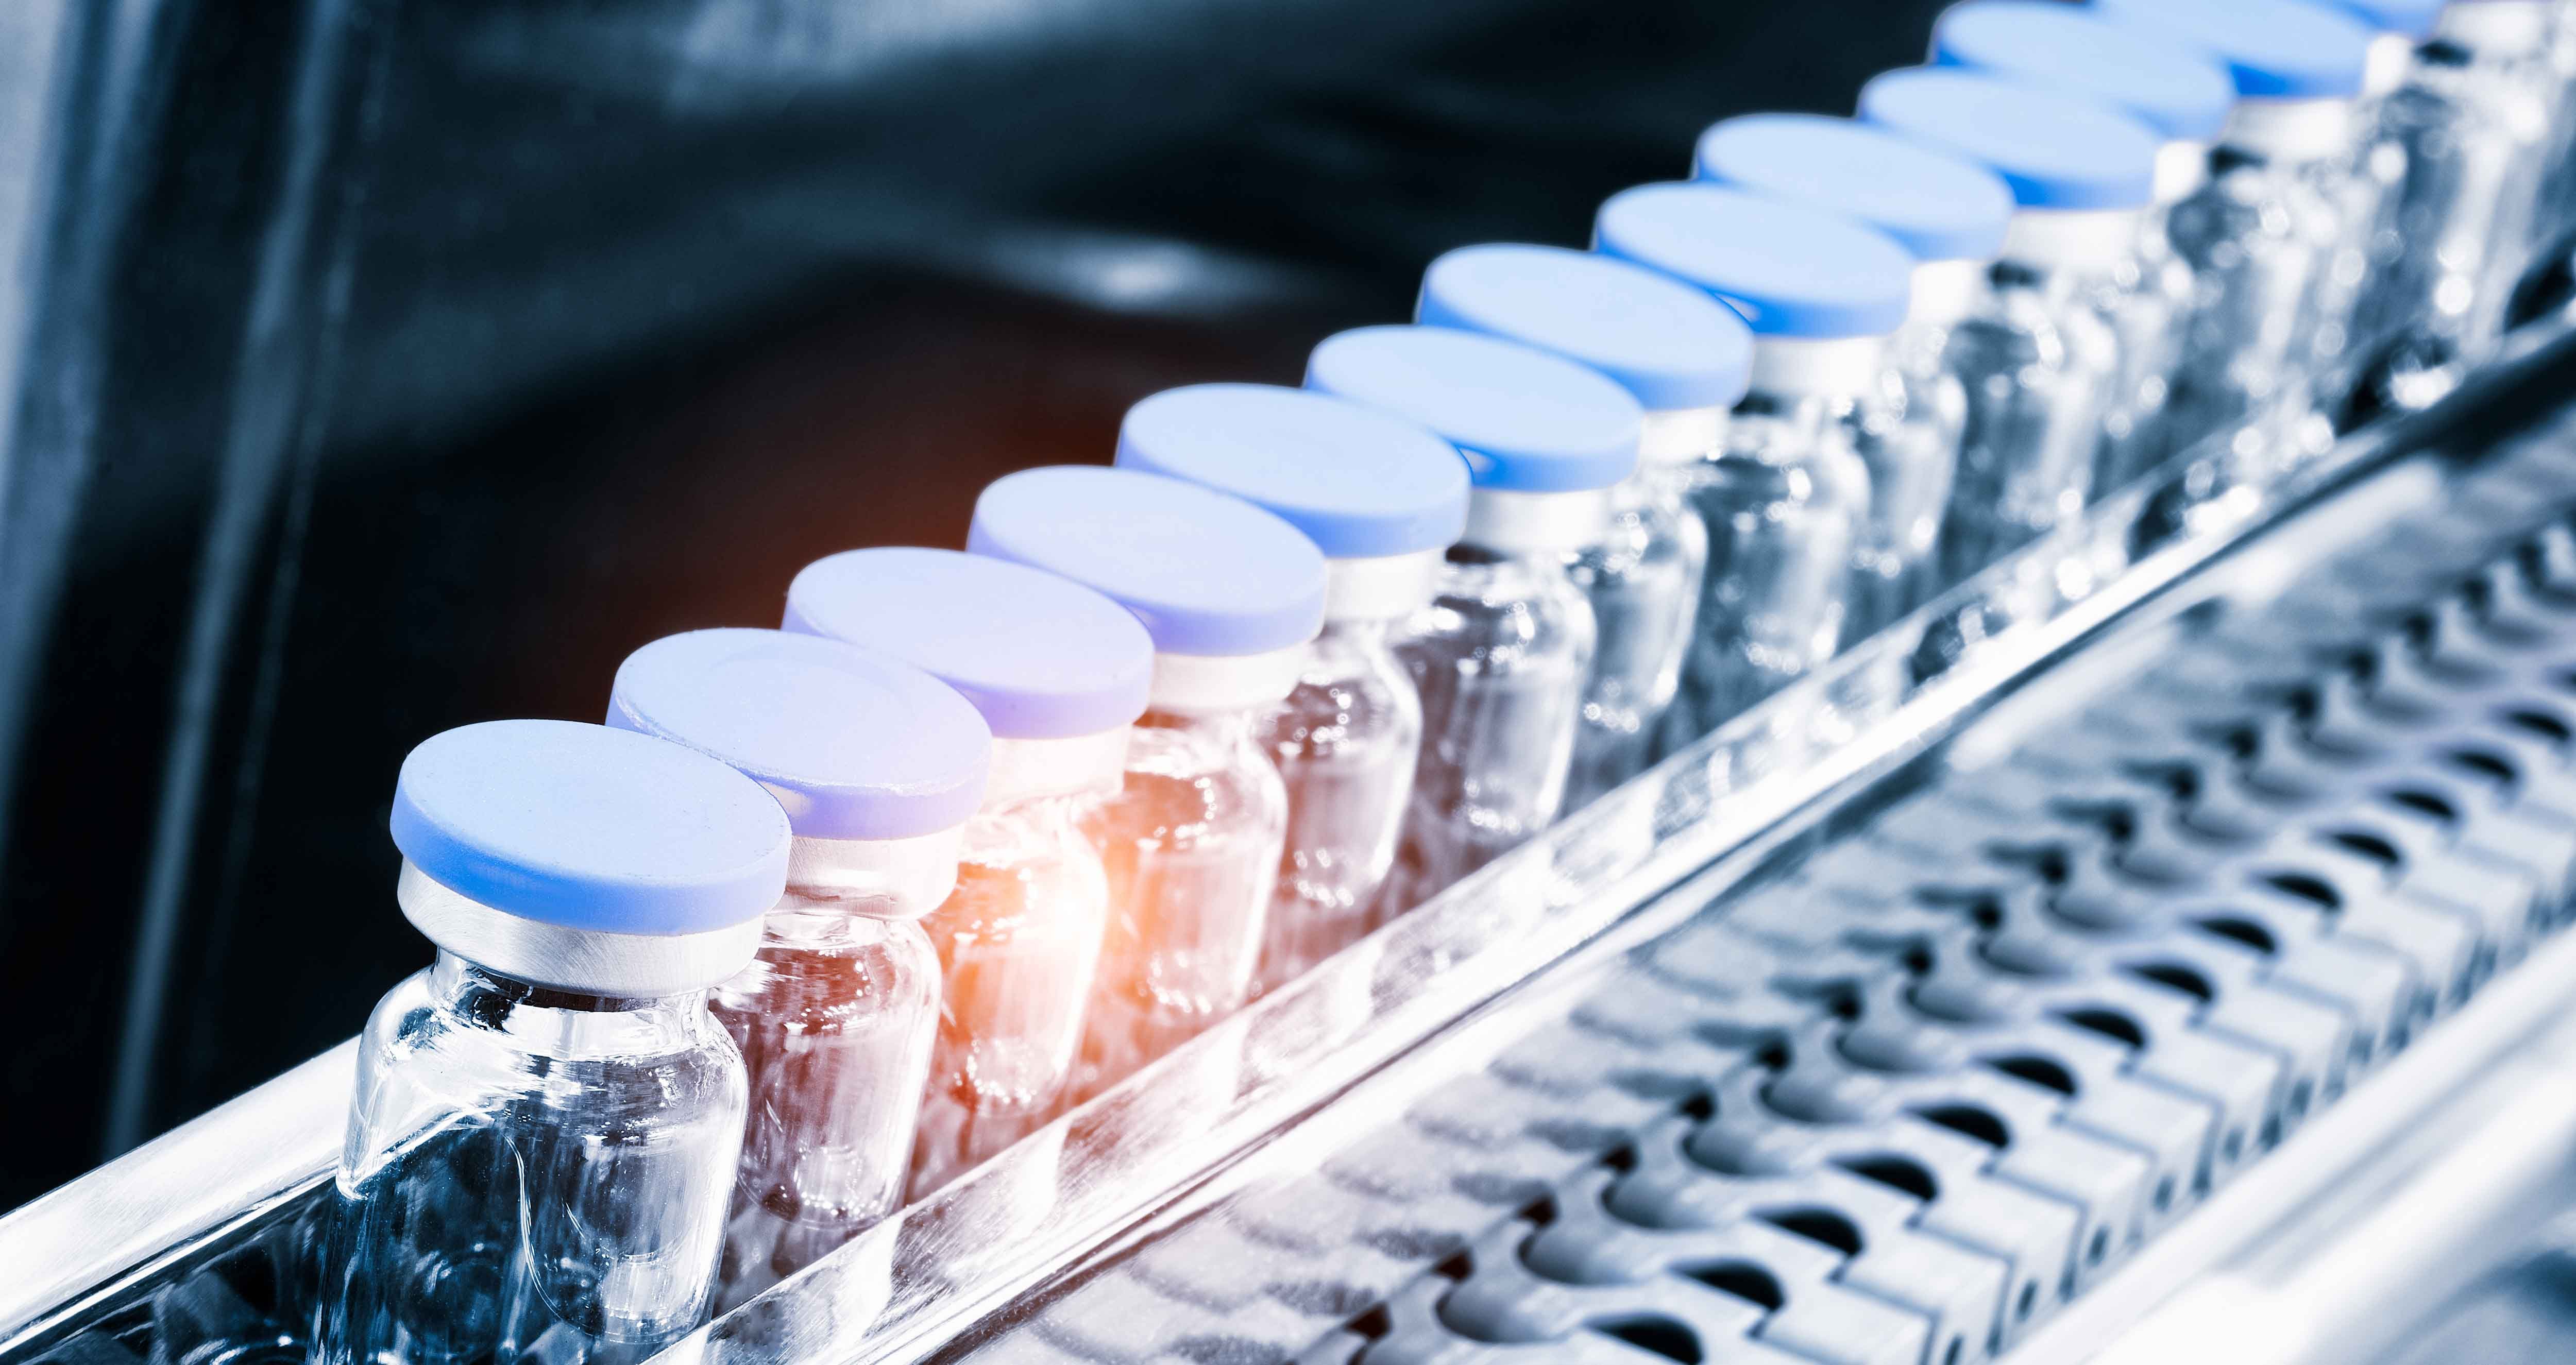 glass-bottles-production-tray-automatic-liquid-dispenser-line-filling-medicines-against-bacteria-viruses-antibiotics-vaccines